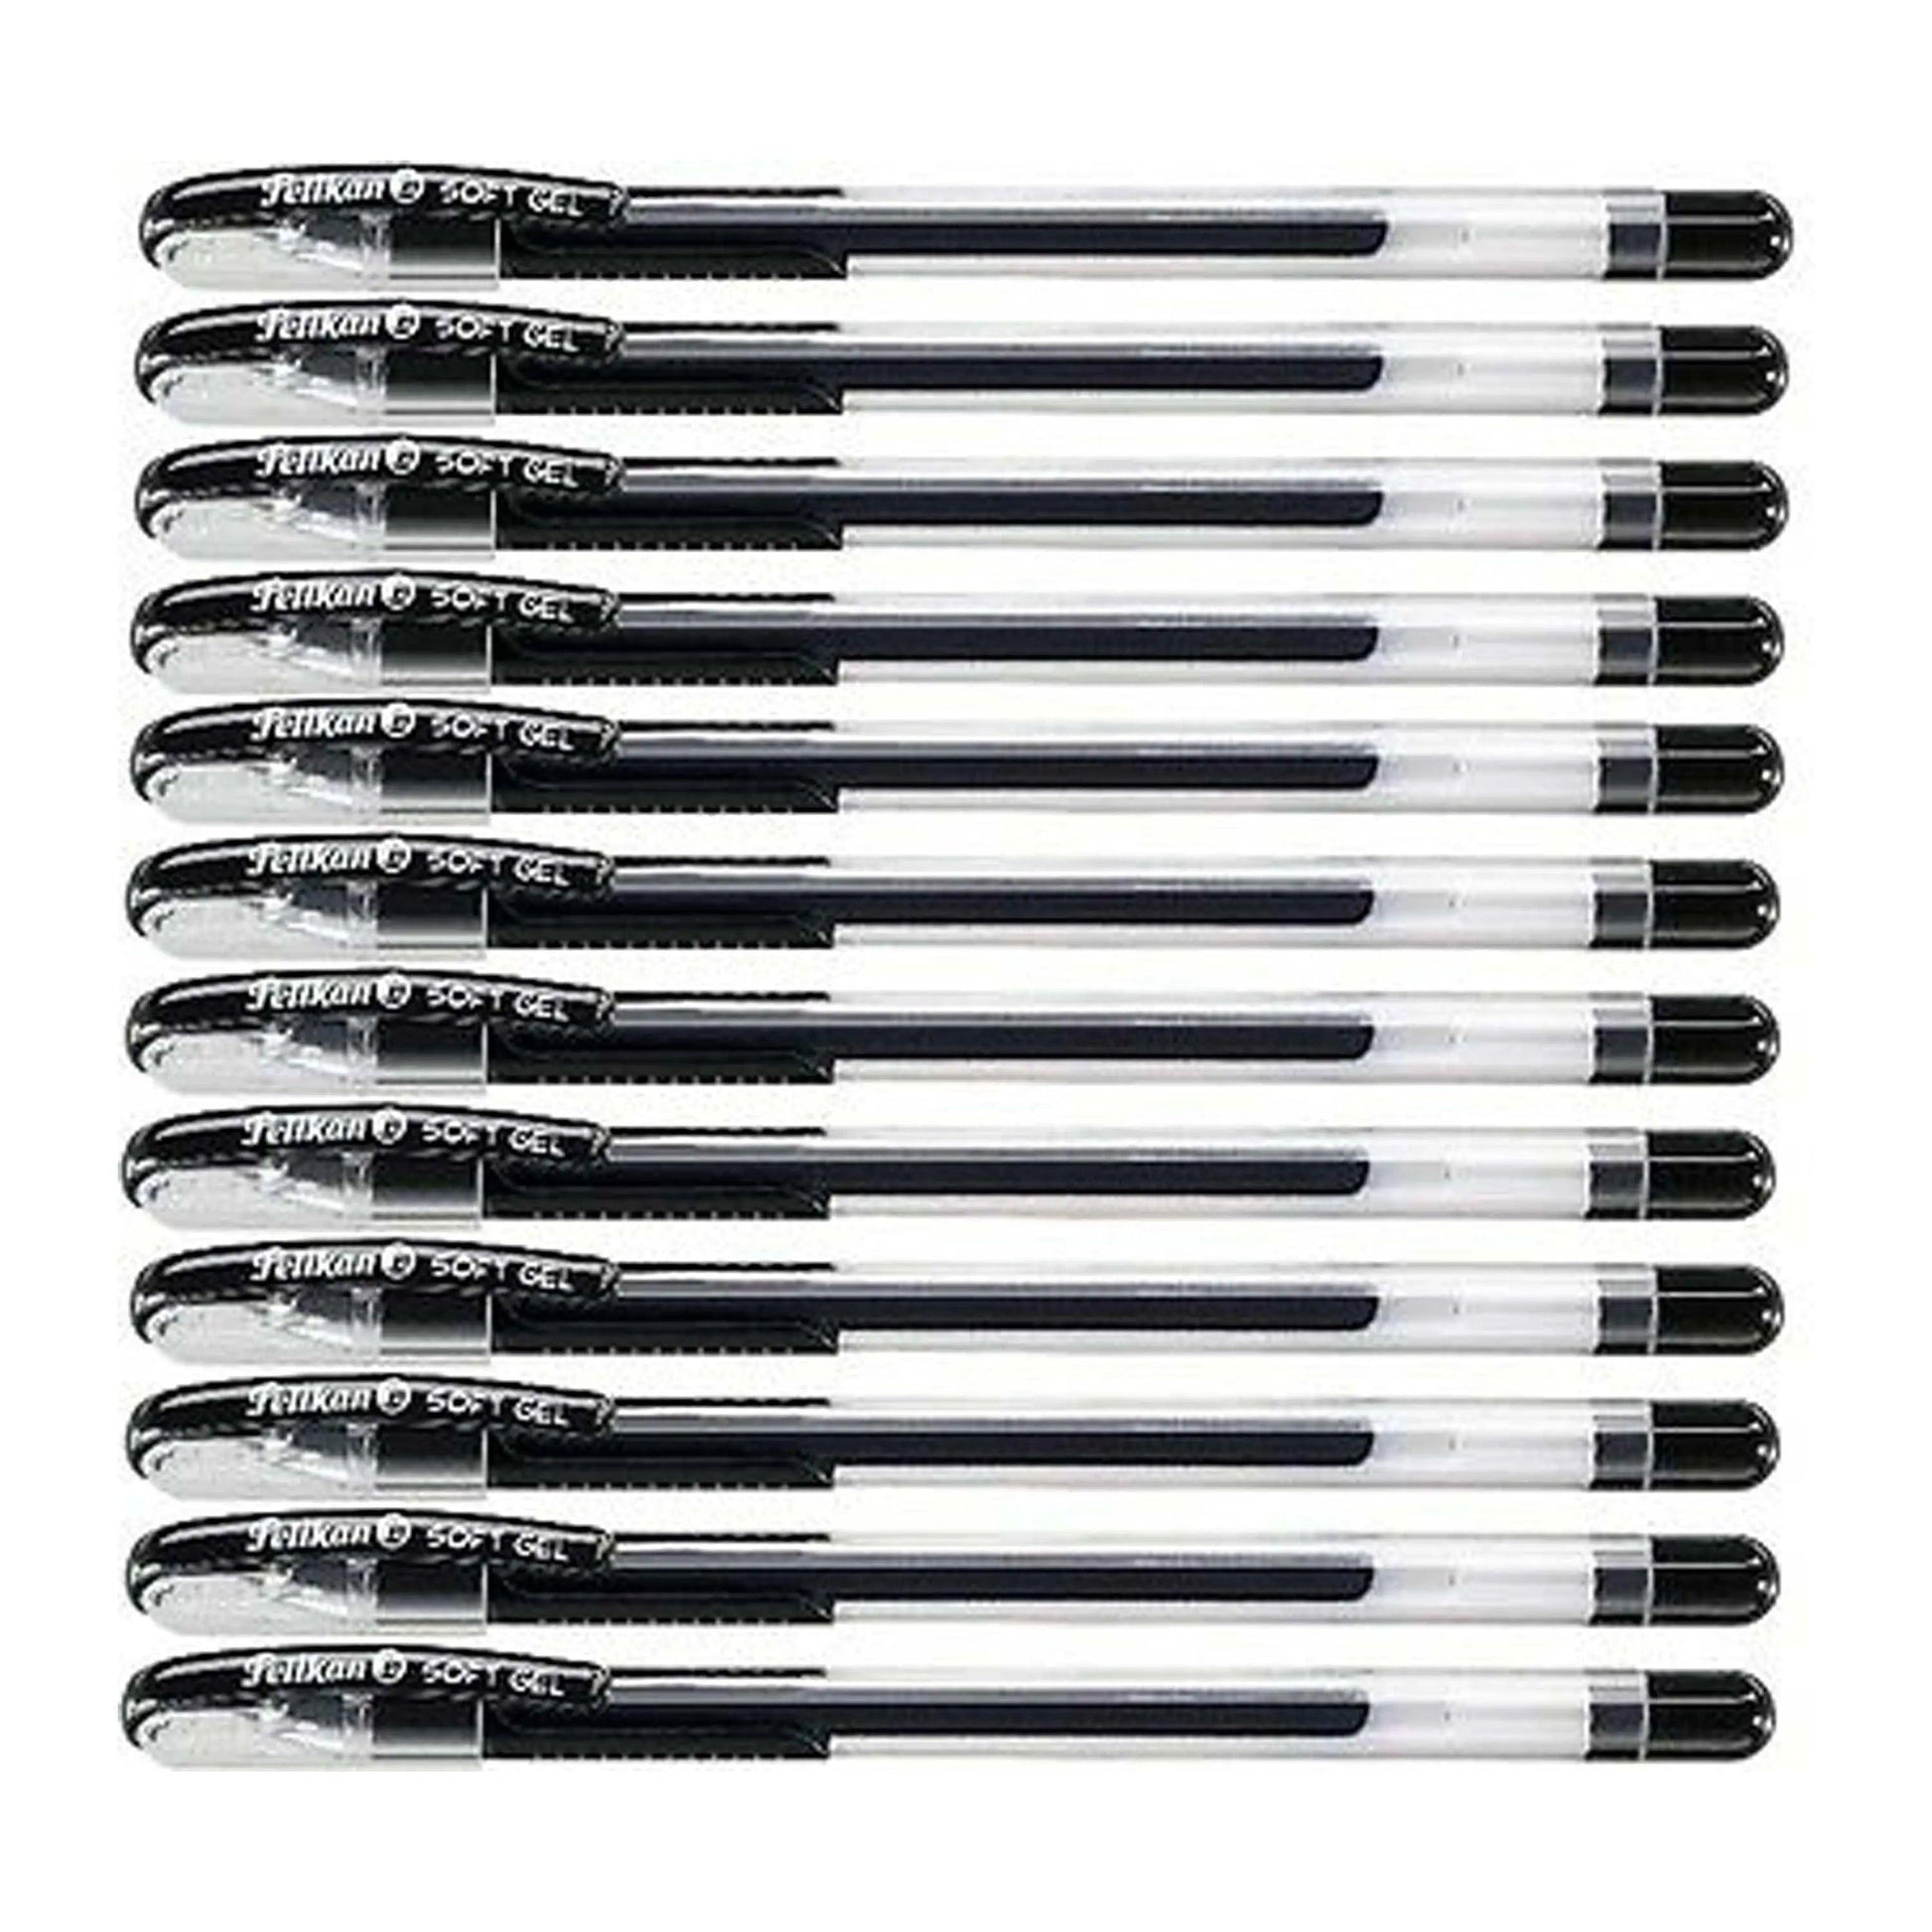 Pelikan Soft Gel Pen Single Pcs G29/12 -Black thestationers